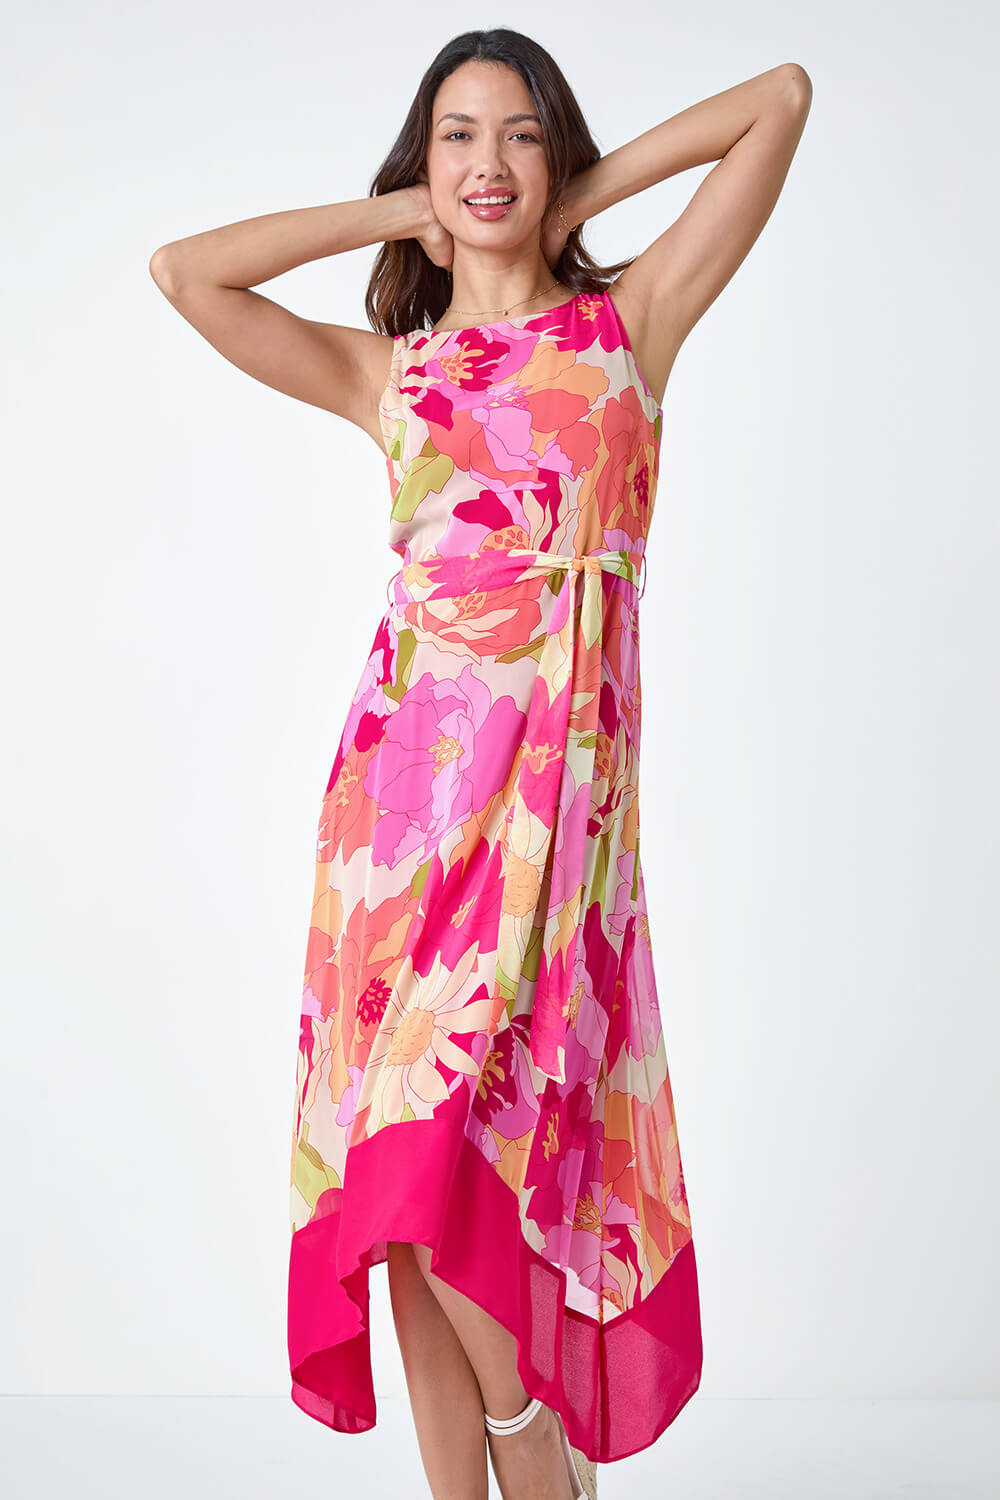 CERISE Sleeveless Floral Print Hanky Hem Dress, Image 2 of 5